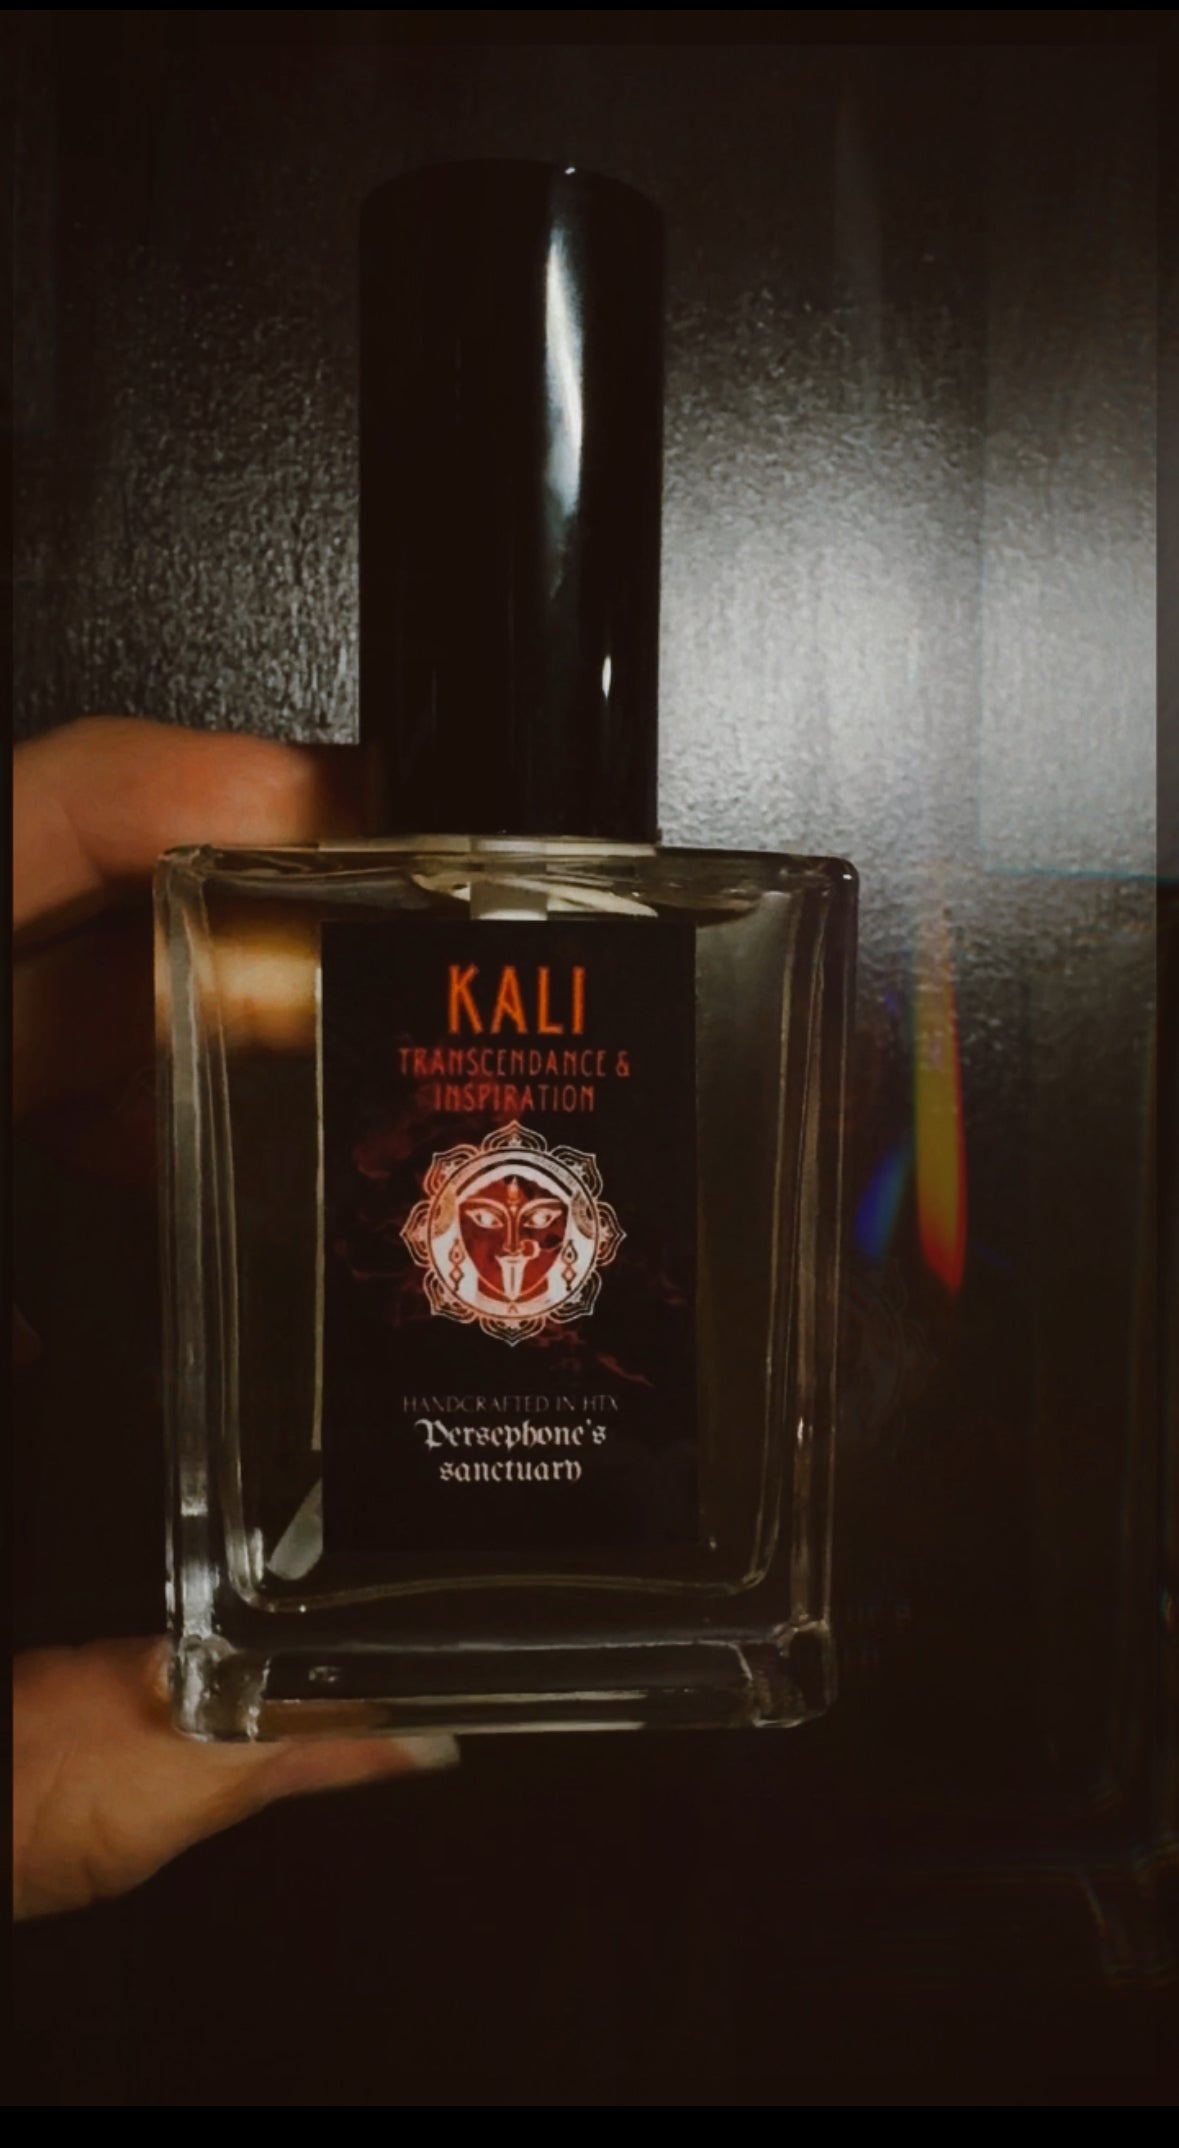 Kali perfume